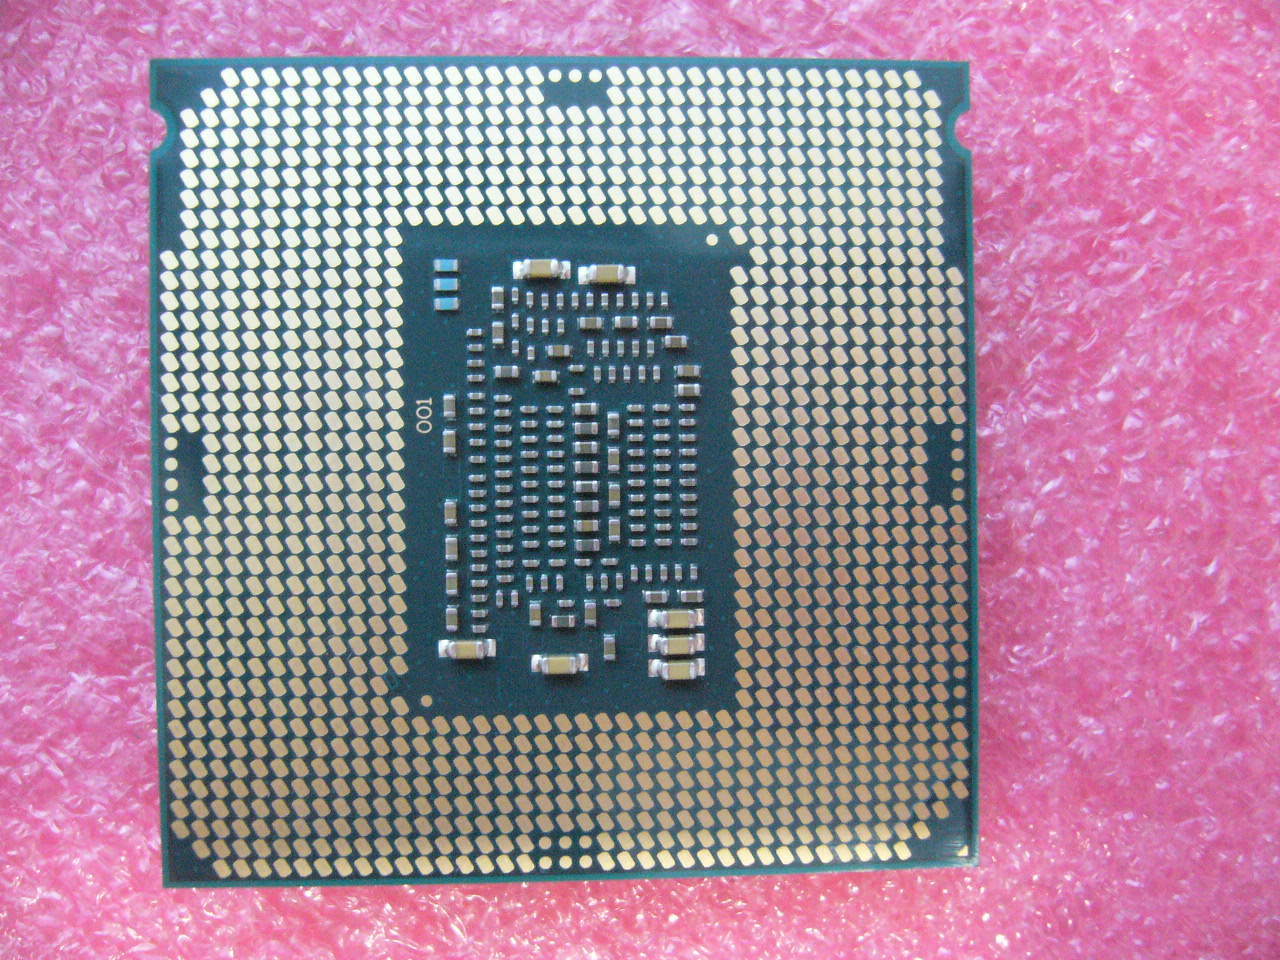 QTY 1x Intel CPU i7-7700 Quad-Cores 3.6Ghz 8MB LGA1151 SR338 PCIE 16x slot not w - zum Schließen ins Bild klicken